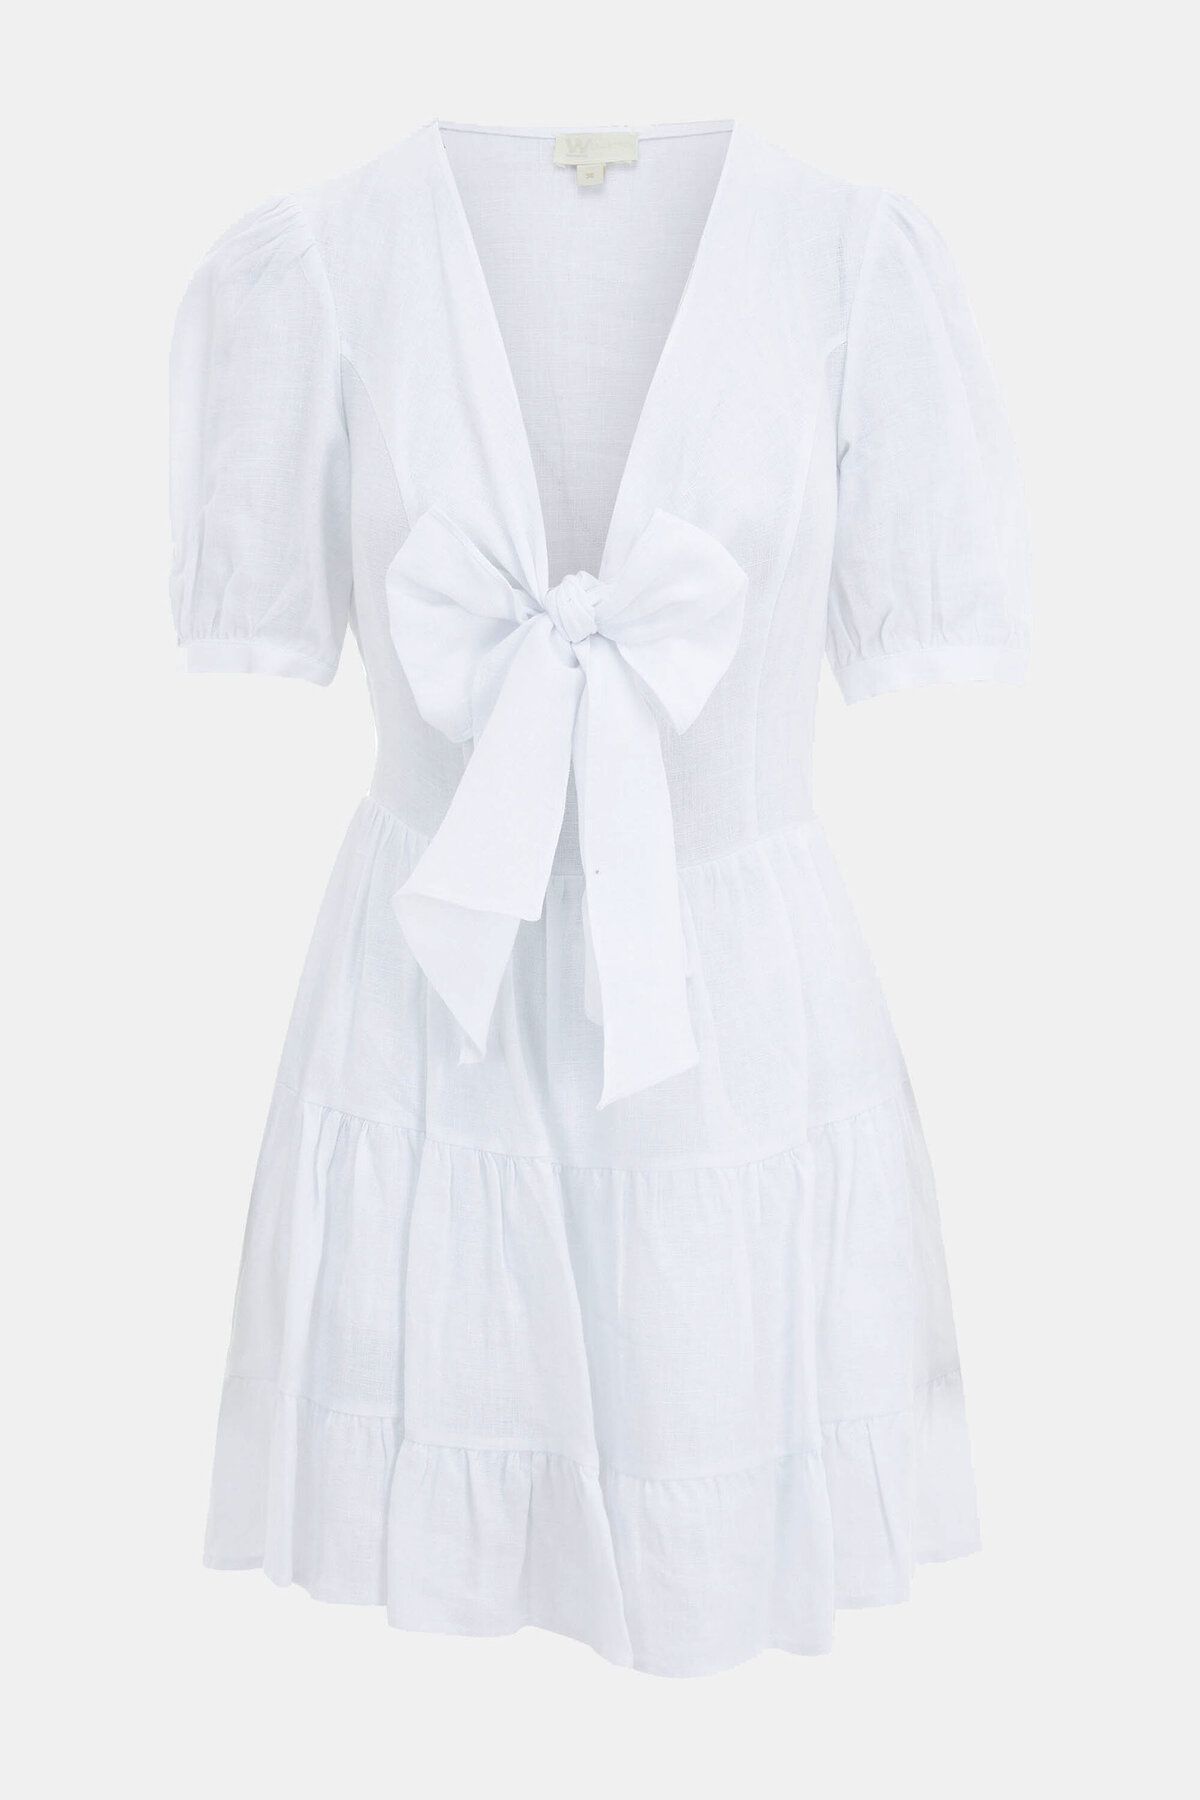 W Collection Beyaz Keten Elbise